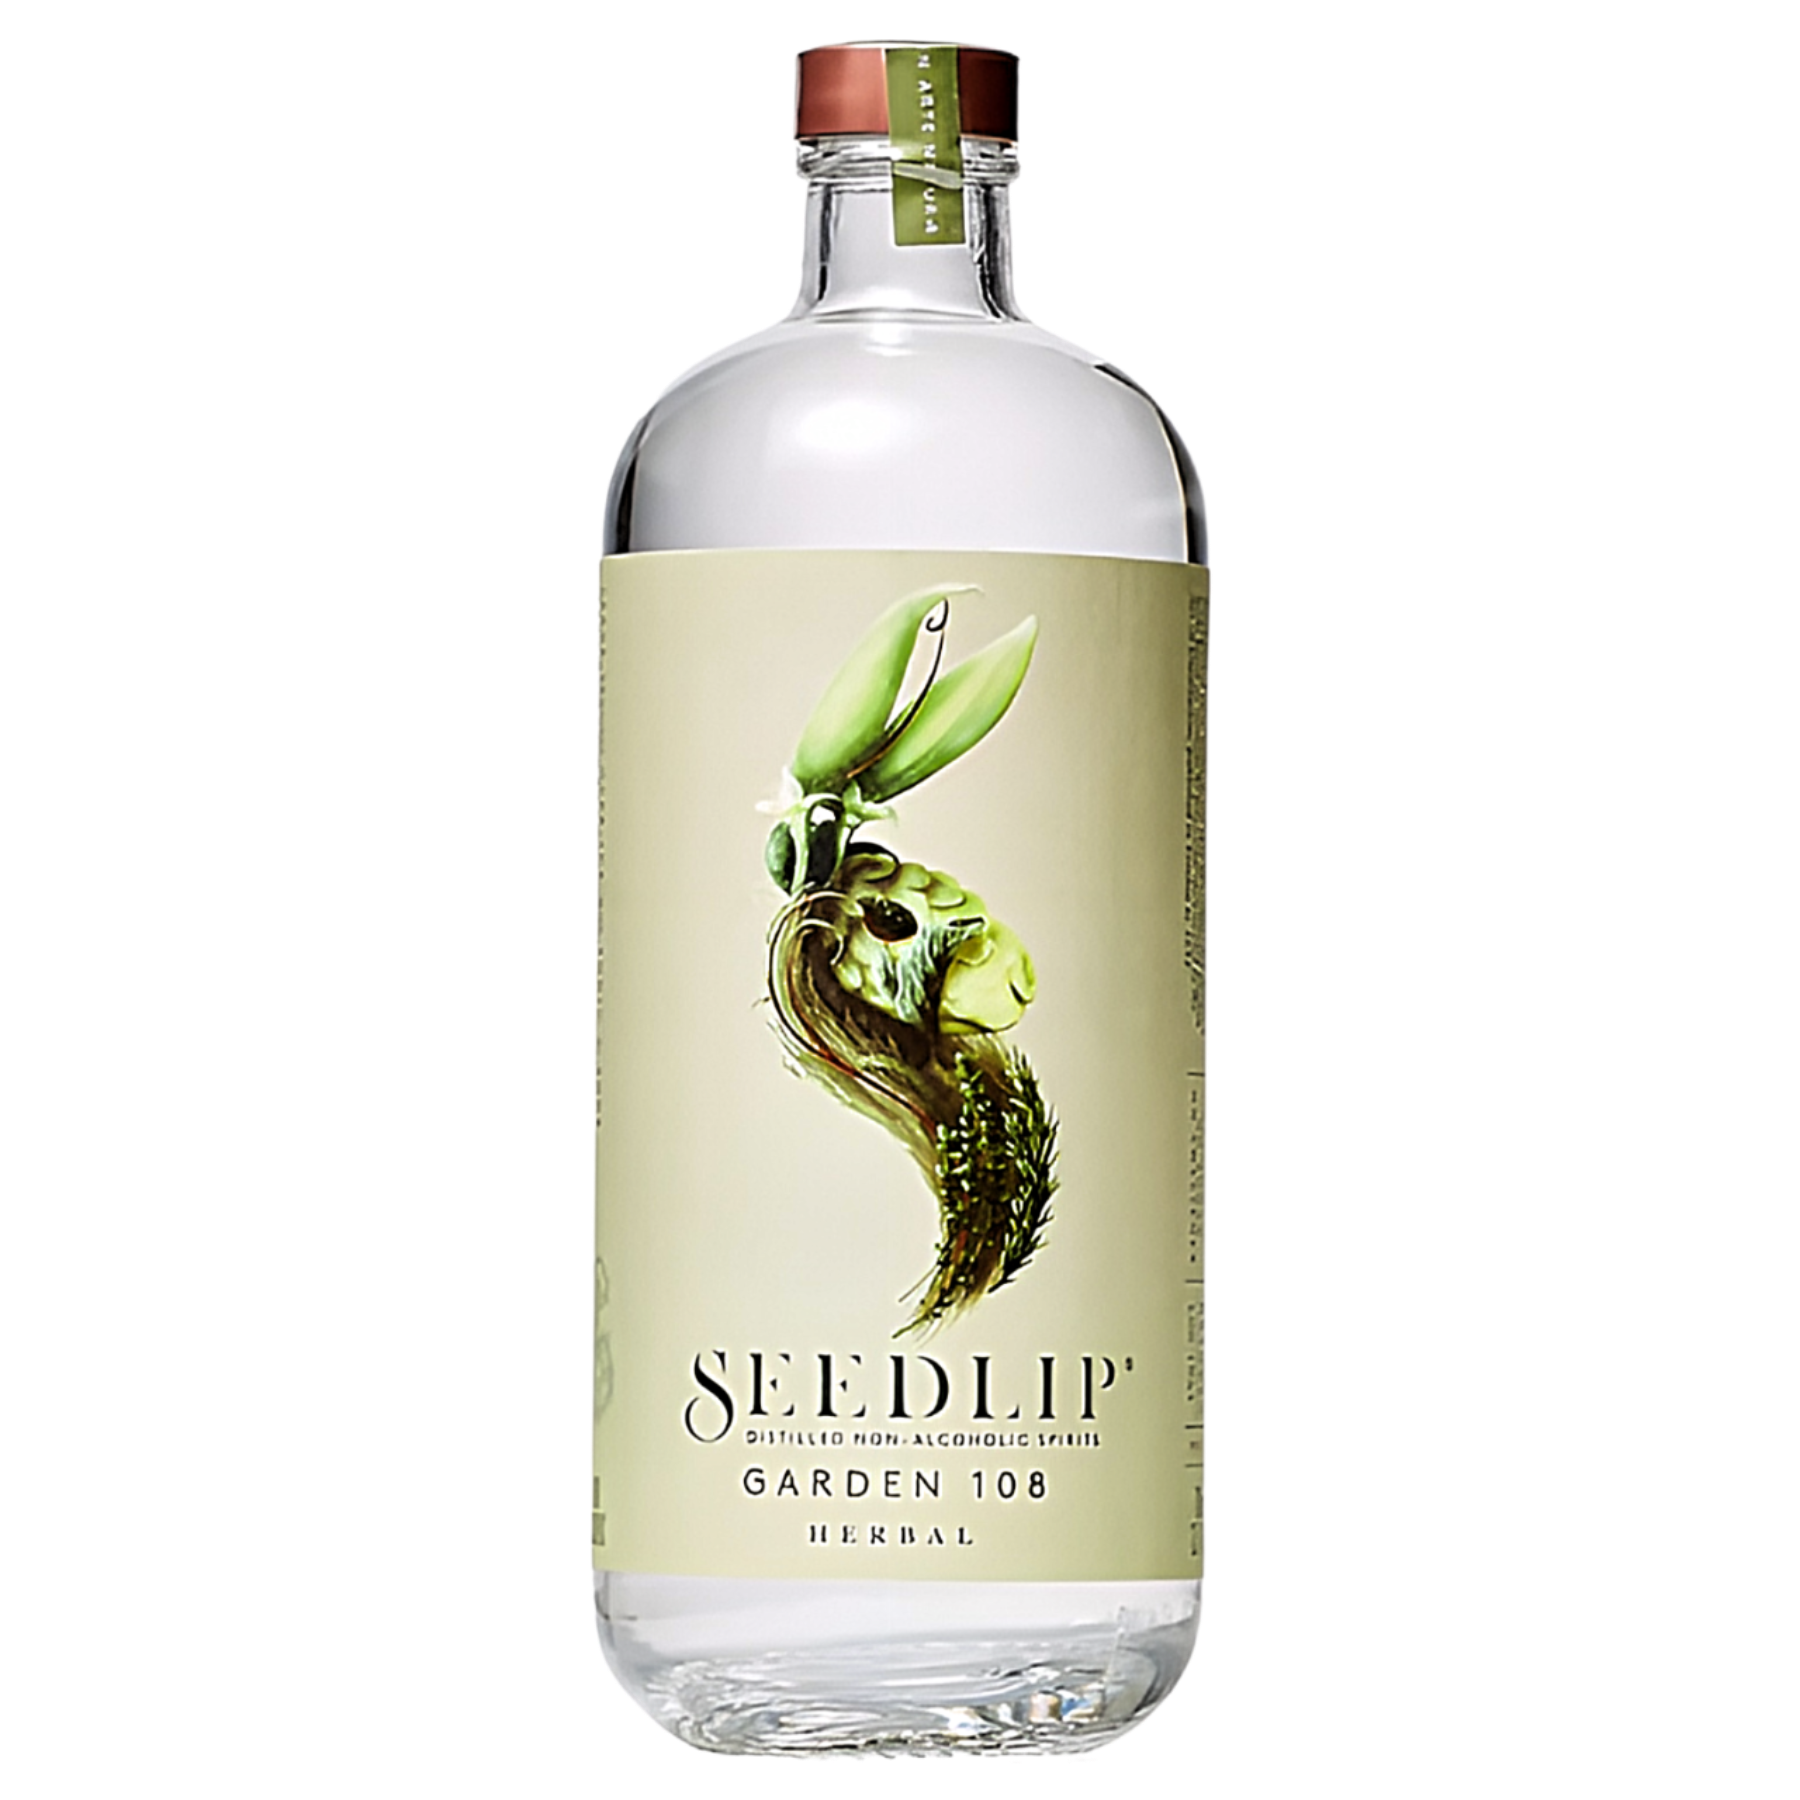 Seedlip Garden 108 Distilled Non-Alcoholic Spirit White